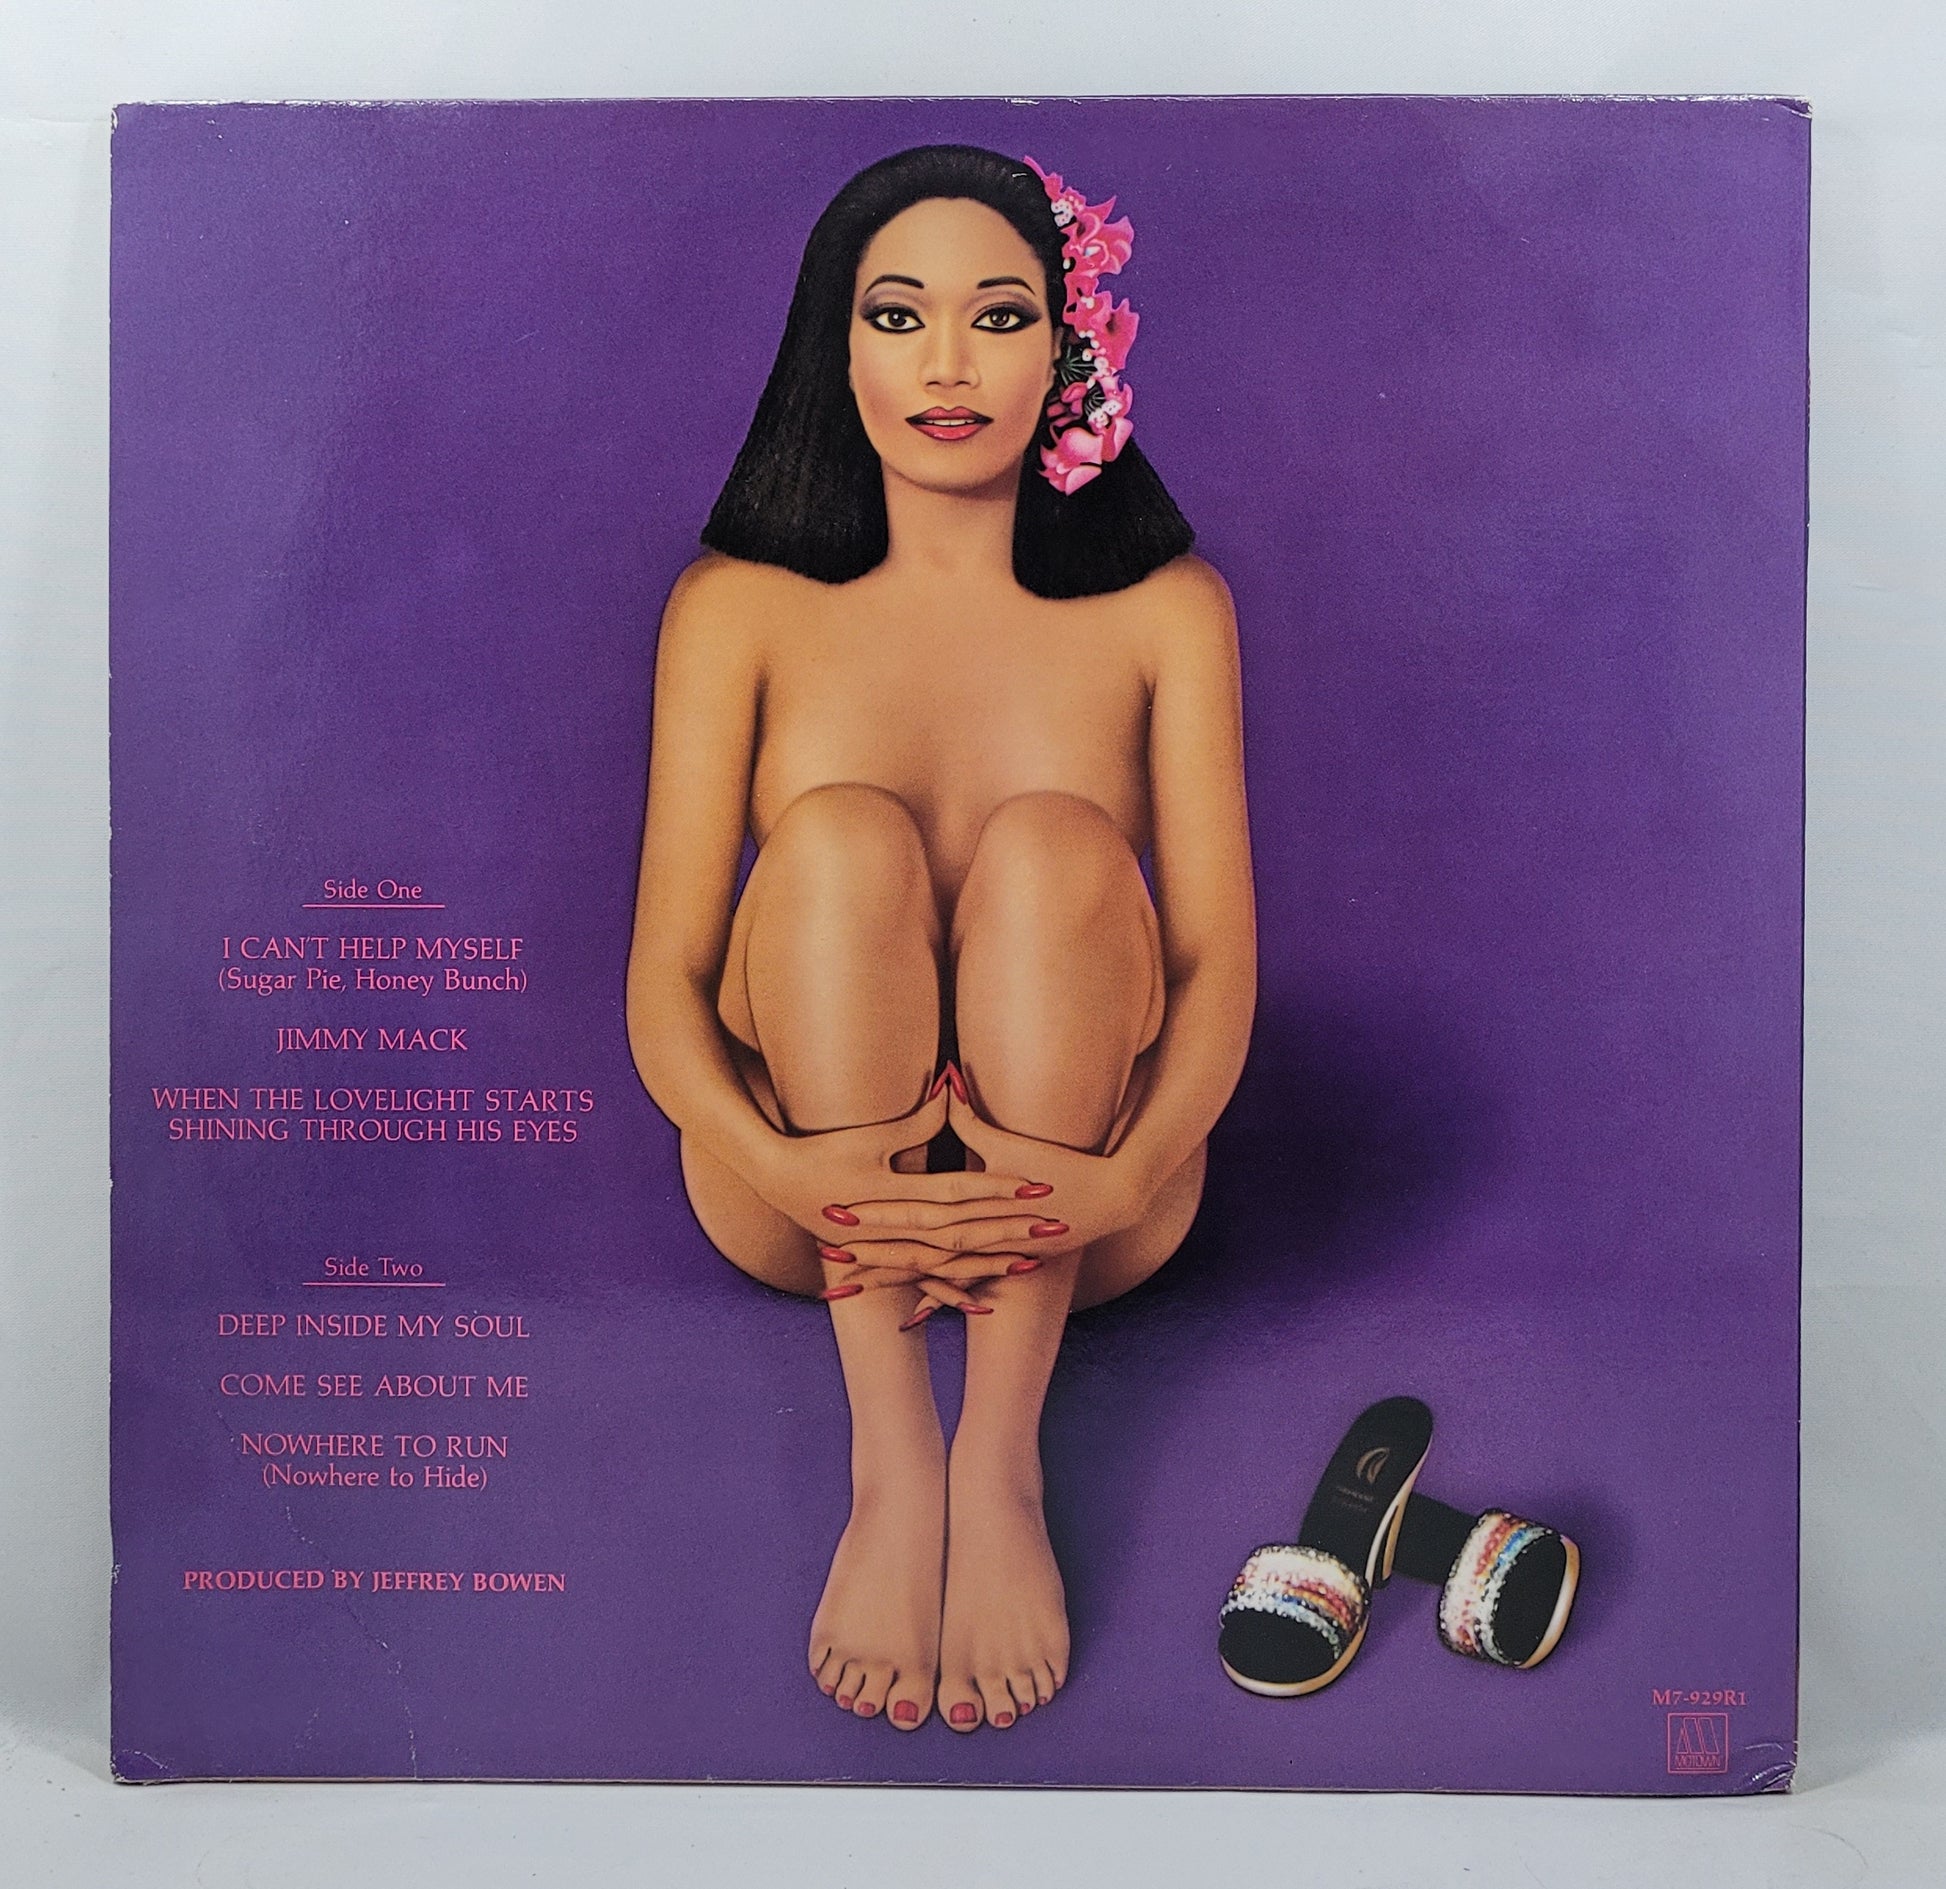 Bonnie Pointer - Bonnie Pointer [1979 Used Vinyl Record LP]